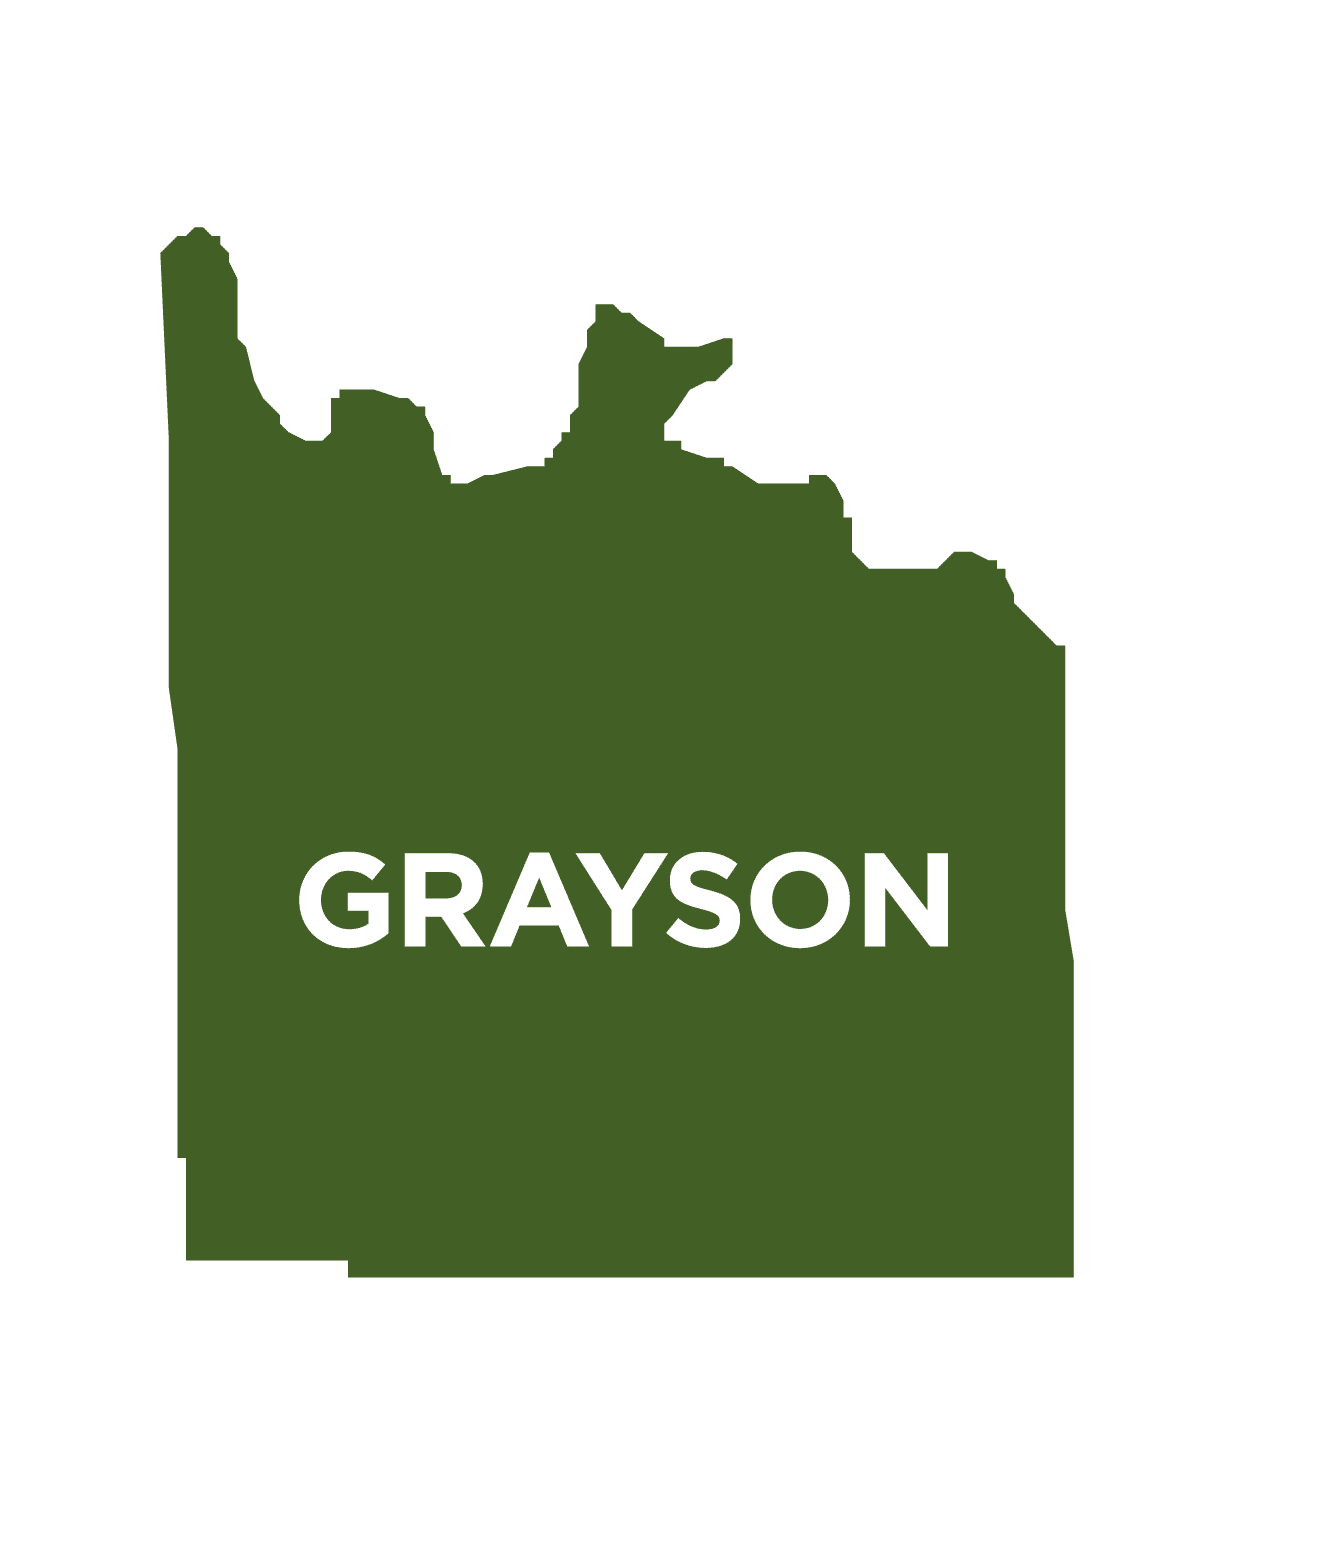 Grayson County